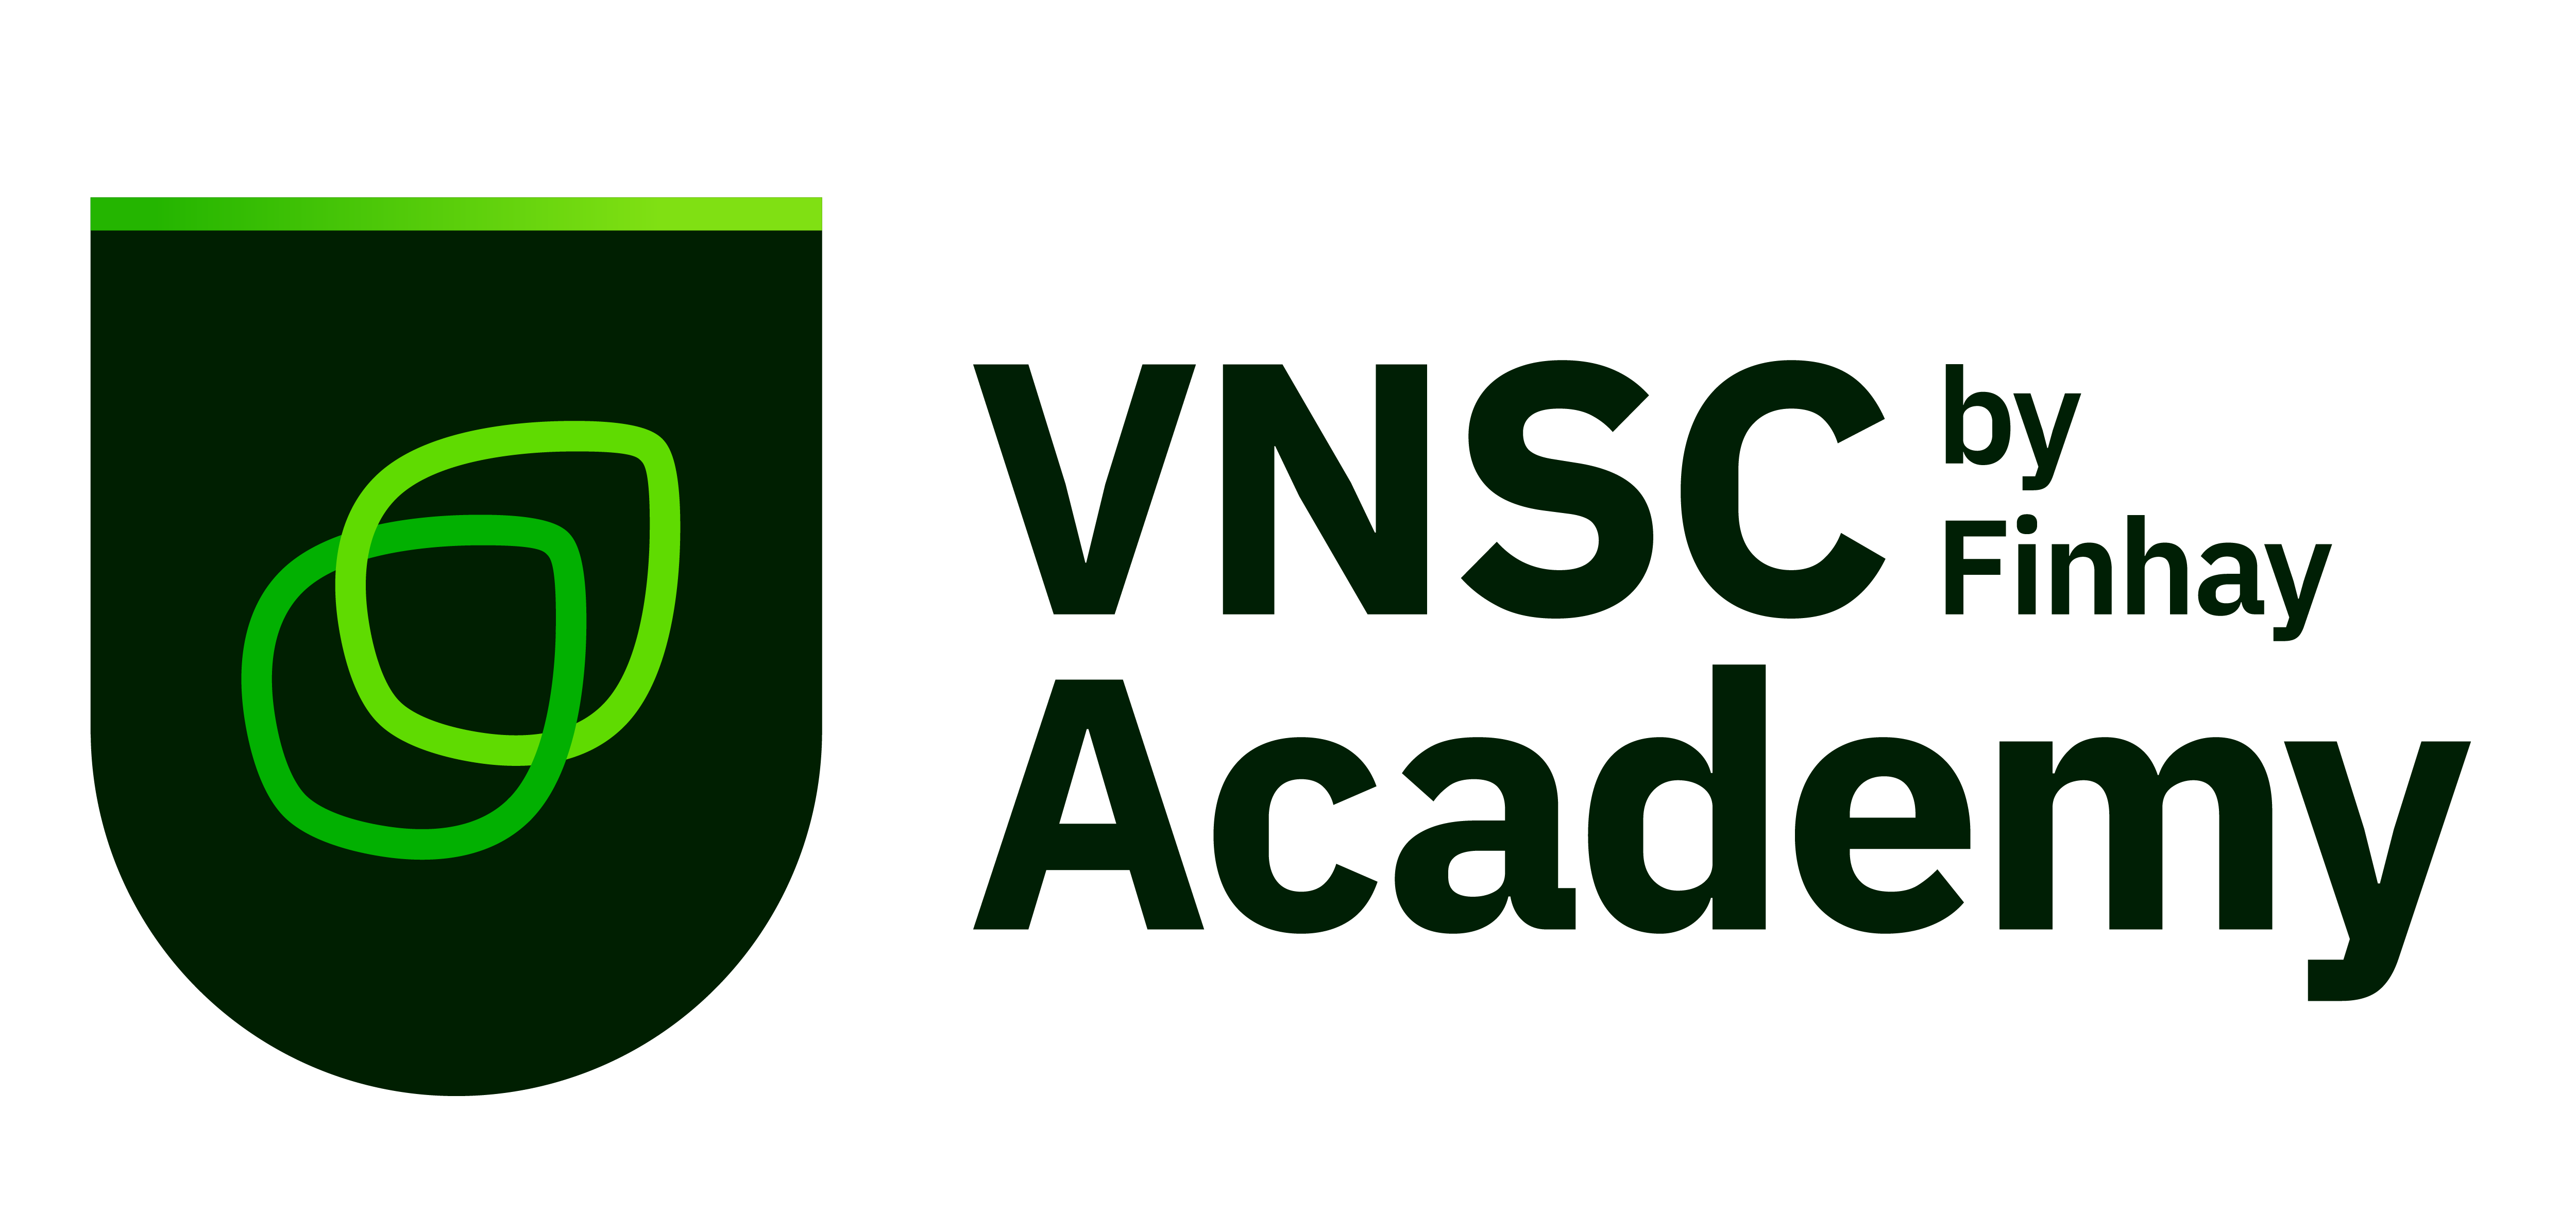 VNSC Academy